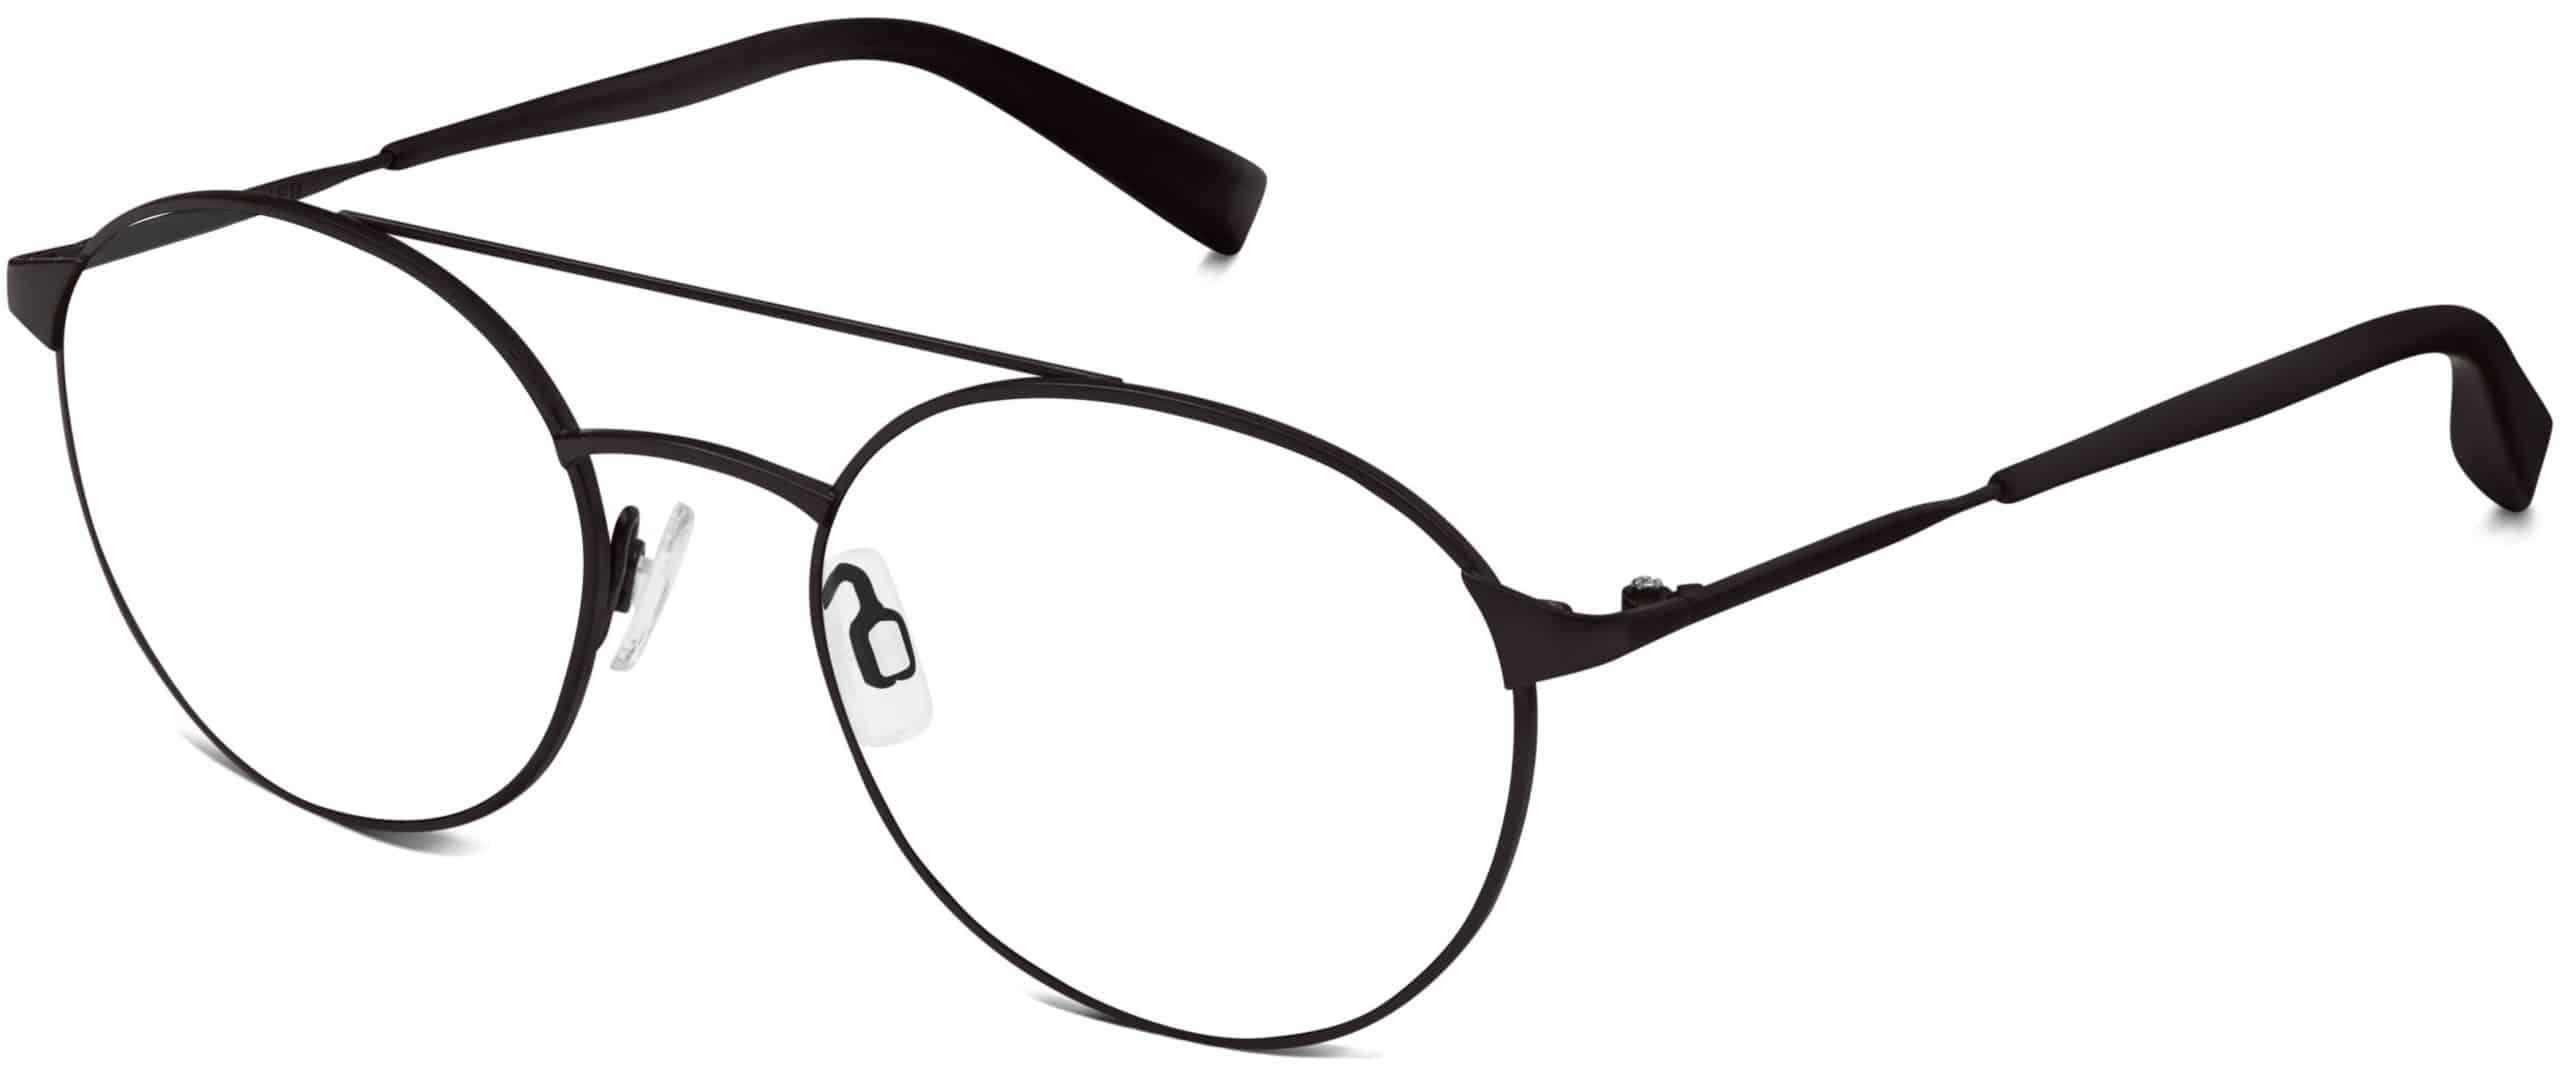 Fisher Eyeglasses In-Depth Review - Warby Parker - 51-18-140 | Eyewear ...